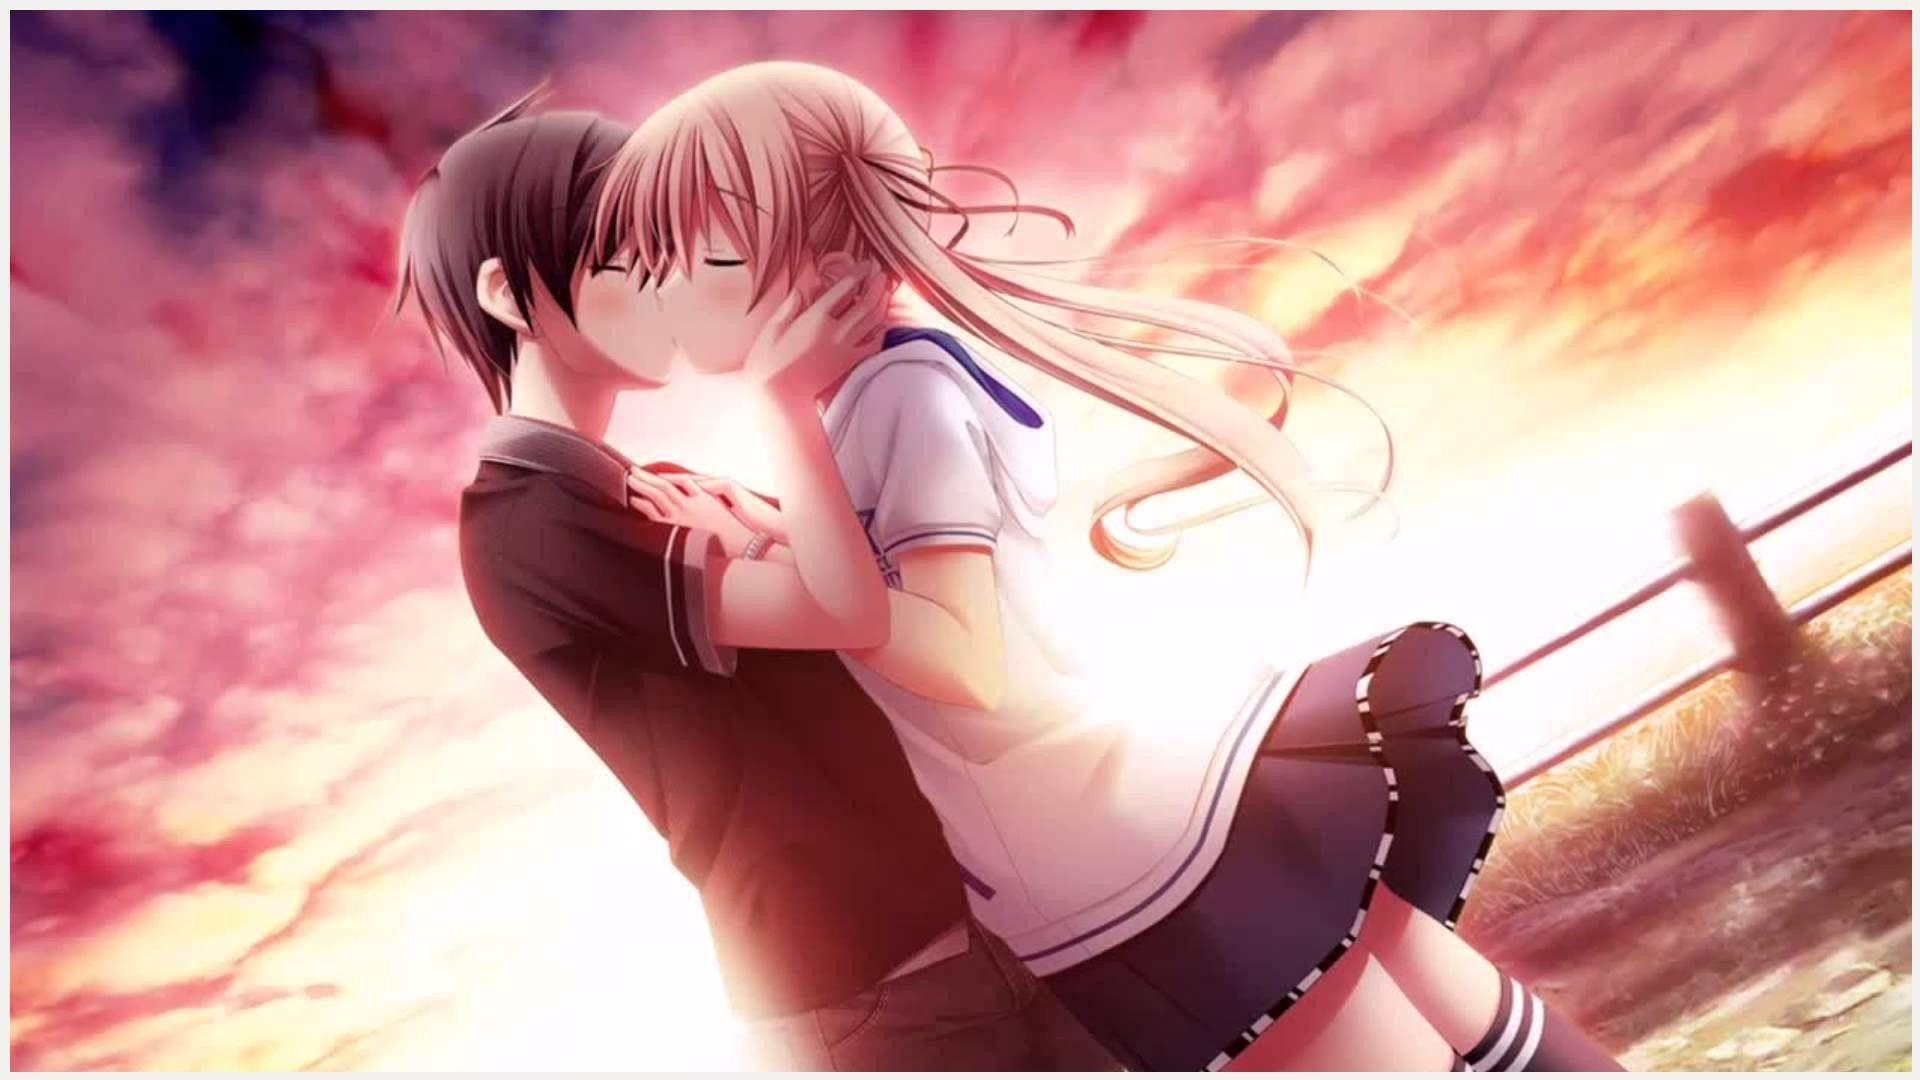 Couple Kiss Romantic Anime Wallpapers - Wallpaper Cave